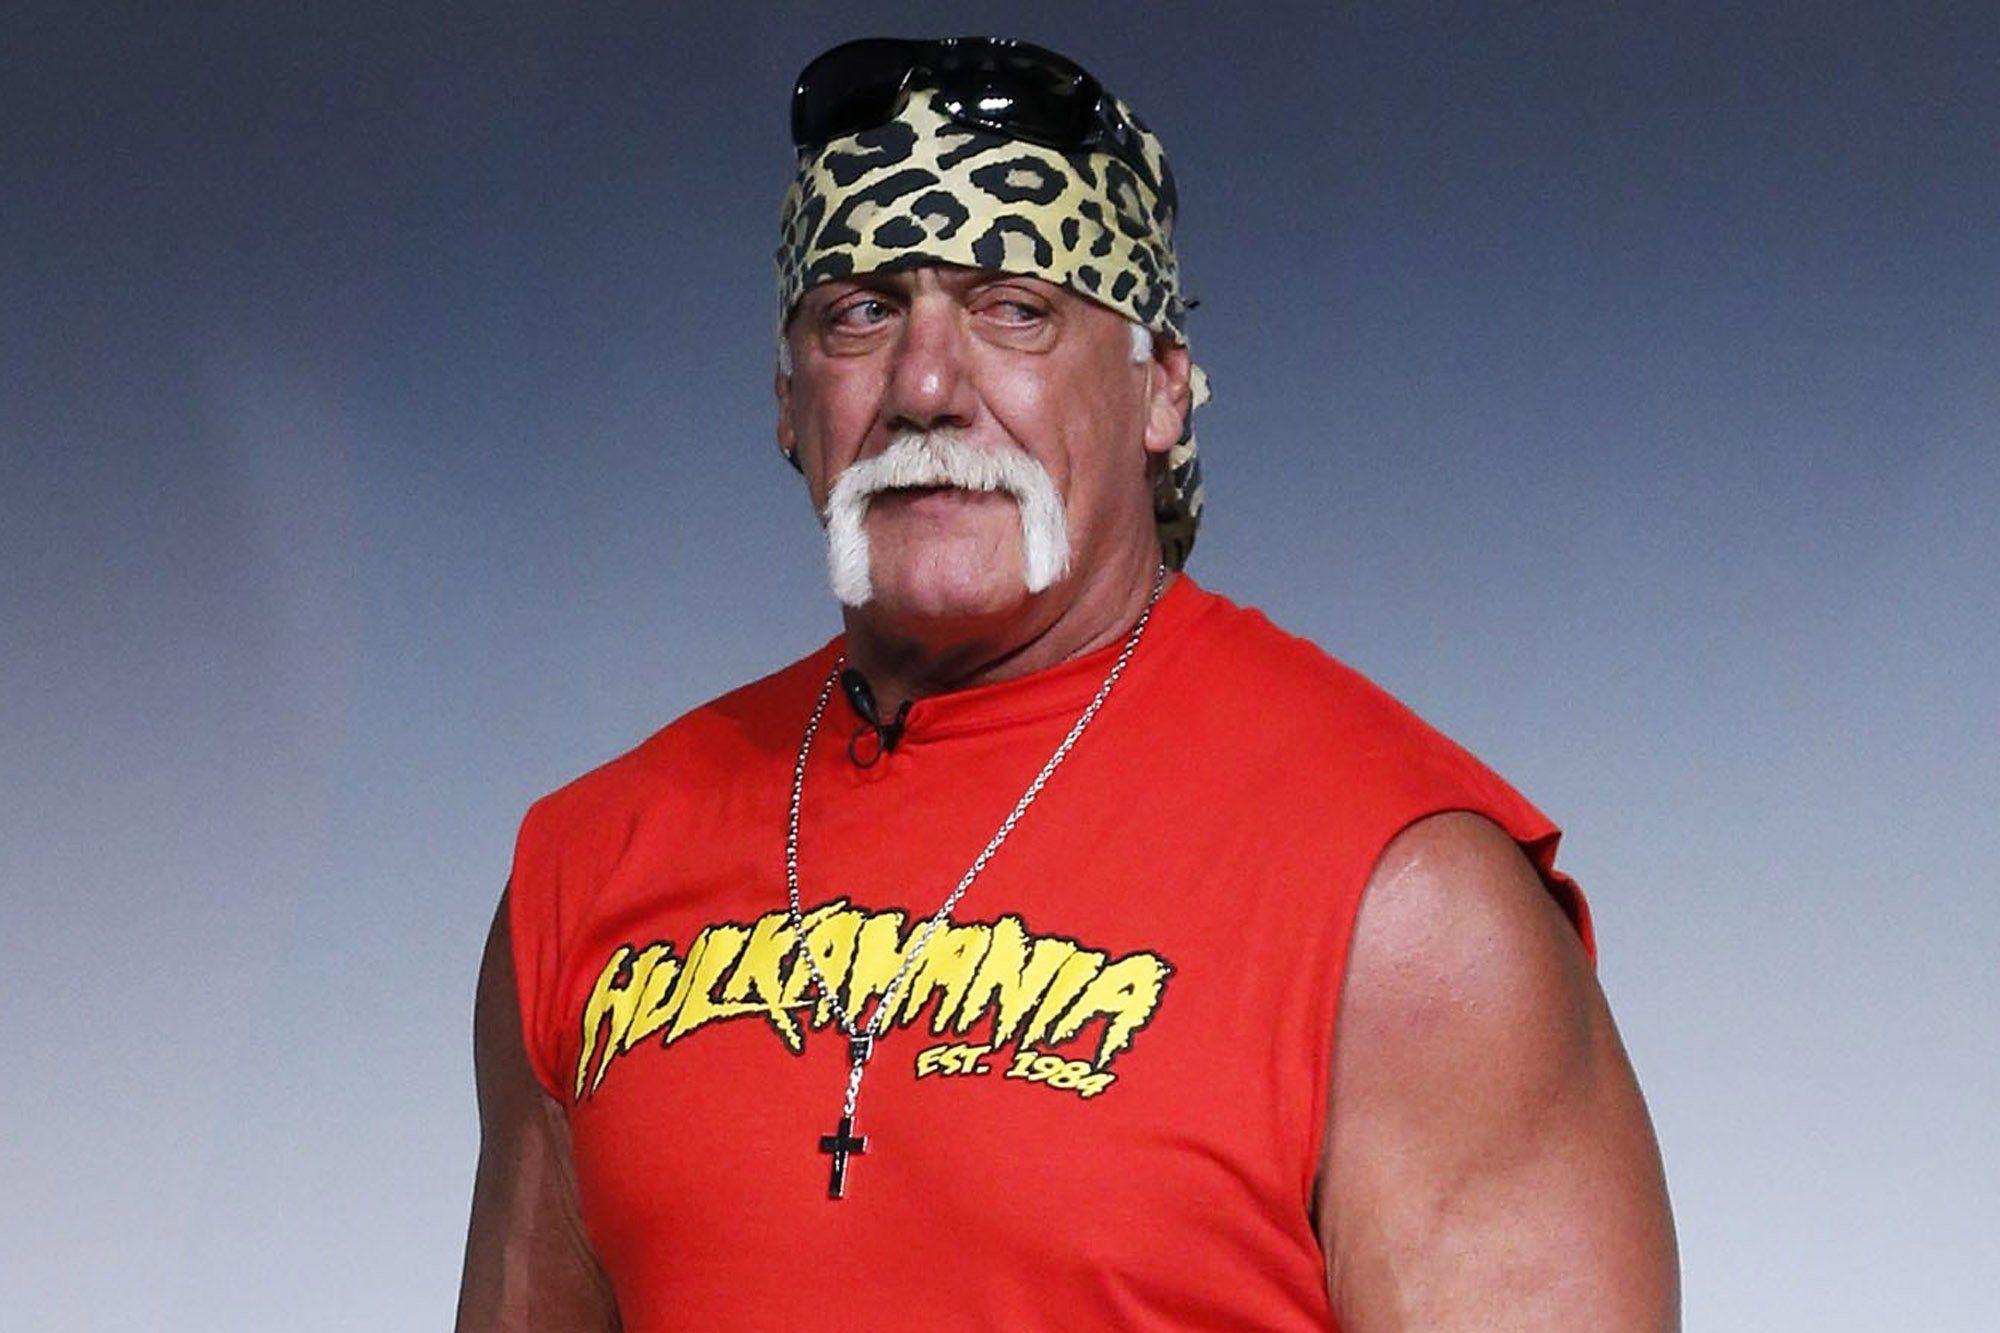 Hulk Hogan Wallpaper Image Photo Picture Background